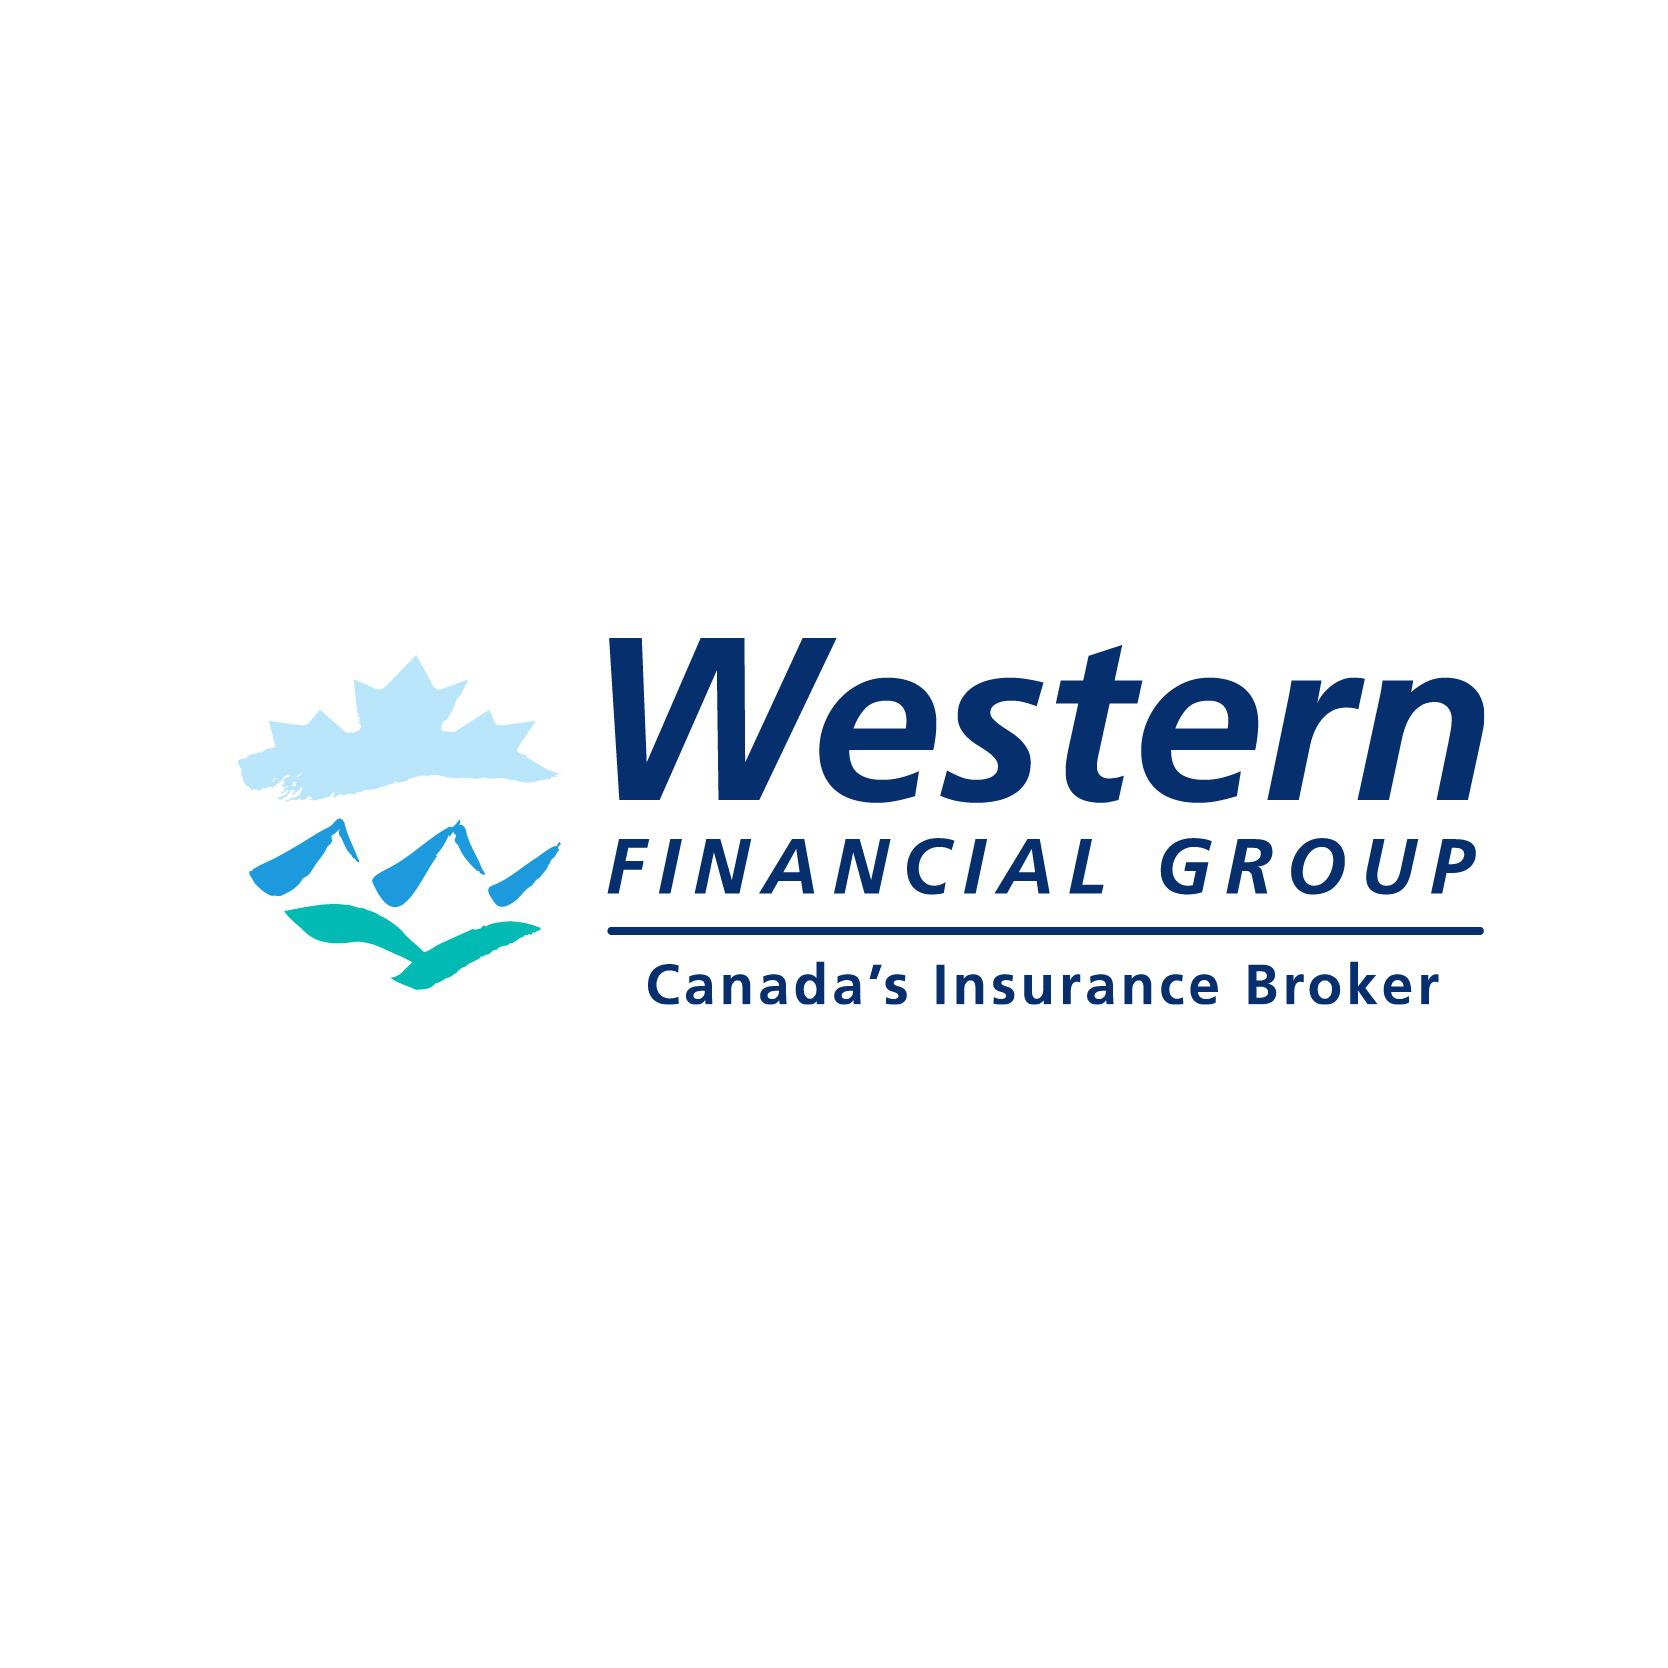 Western Financial Group Inc. - Canada's Insurance Broker Logo